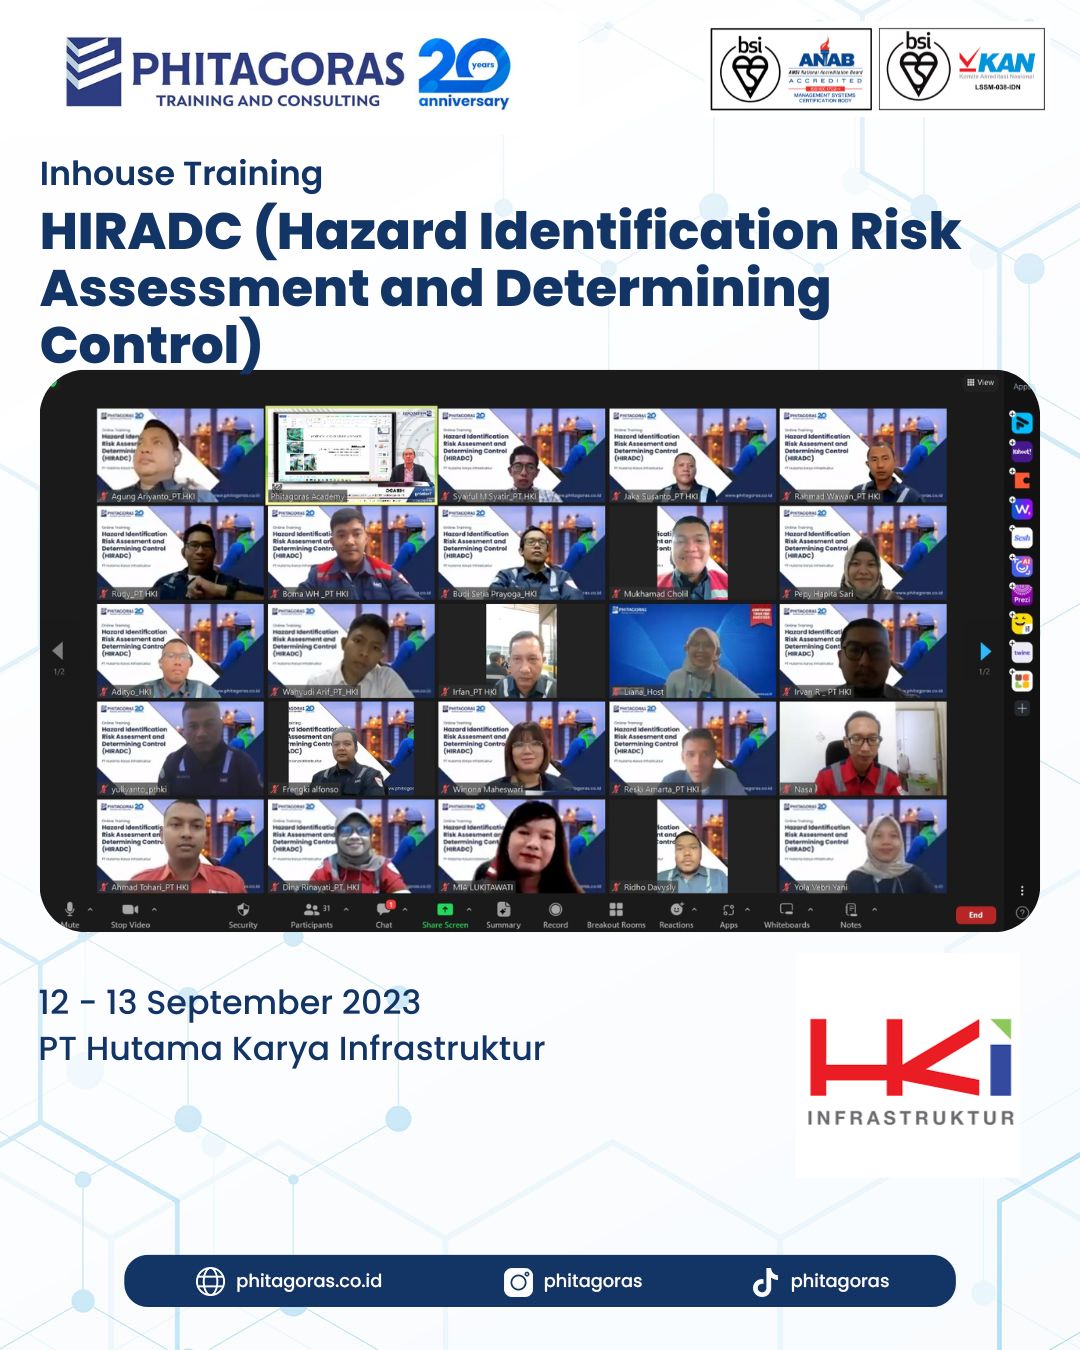 Inhouse Training HIRADC (Hazard Identification Risk Assessment and Determining Control) - PT Hutama Karya Infrastruktur